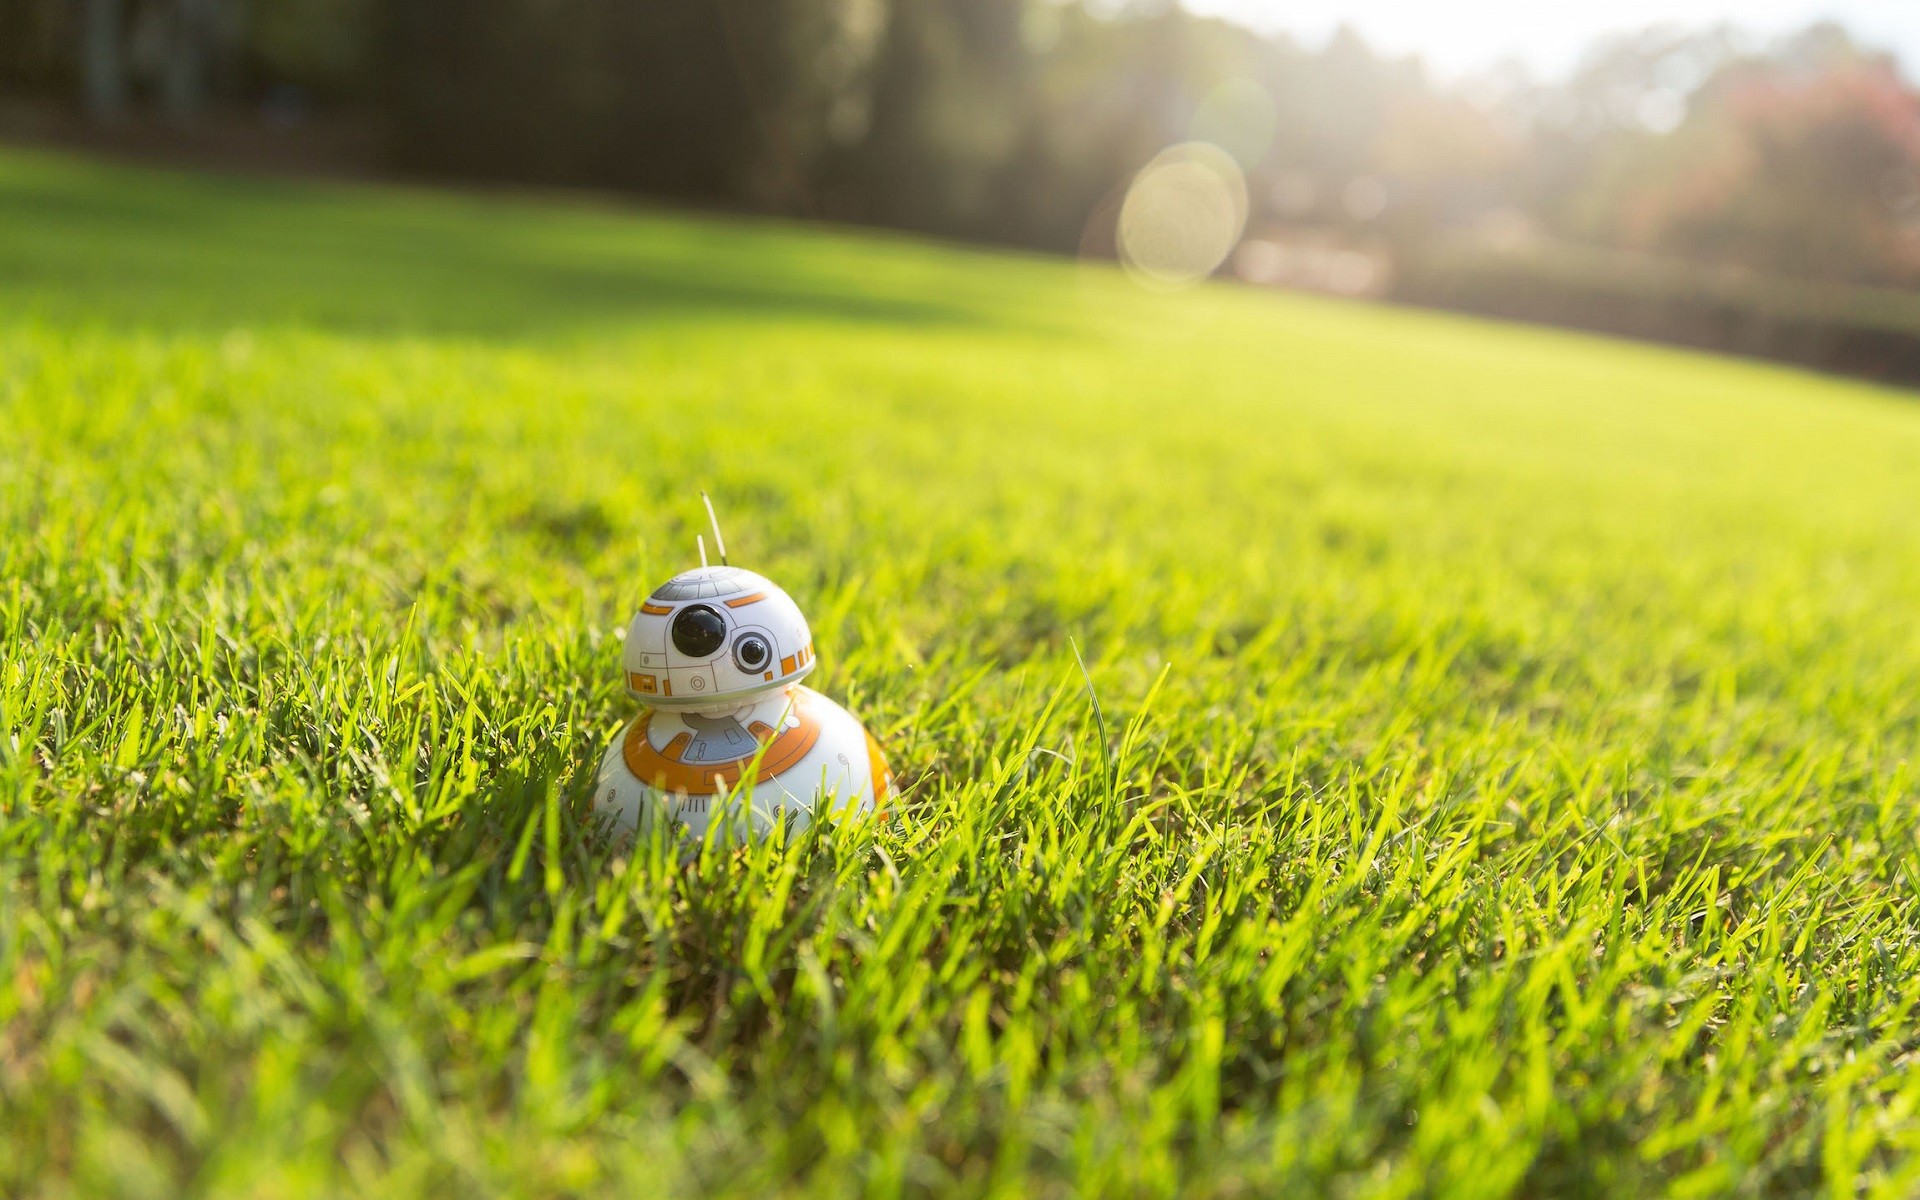 General 1920x1200 Star Wars BB-8 toys grass tilt shift Star Wars Droids outdoors